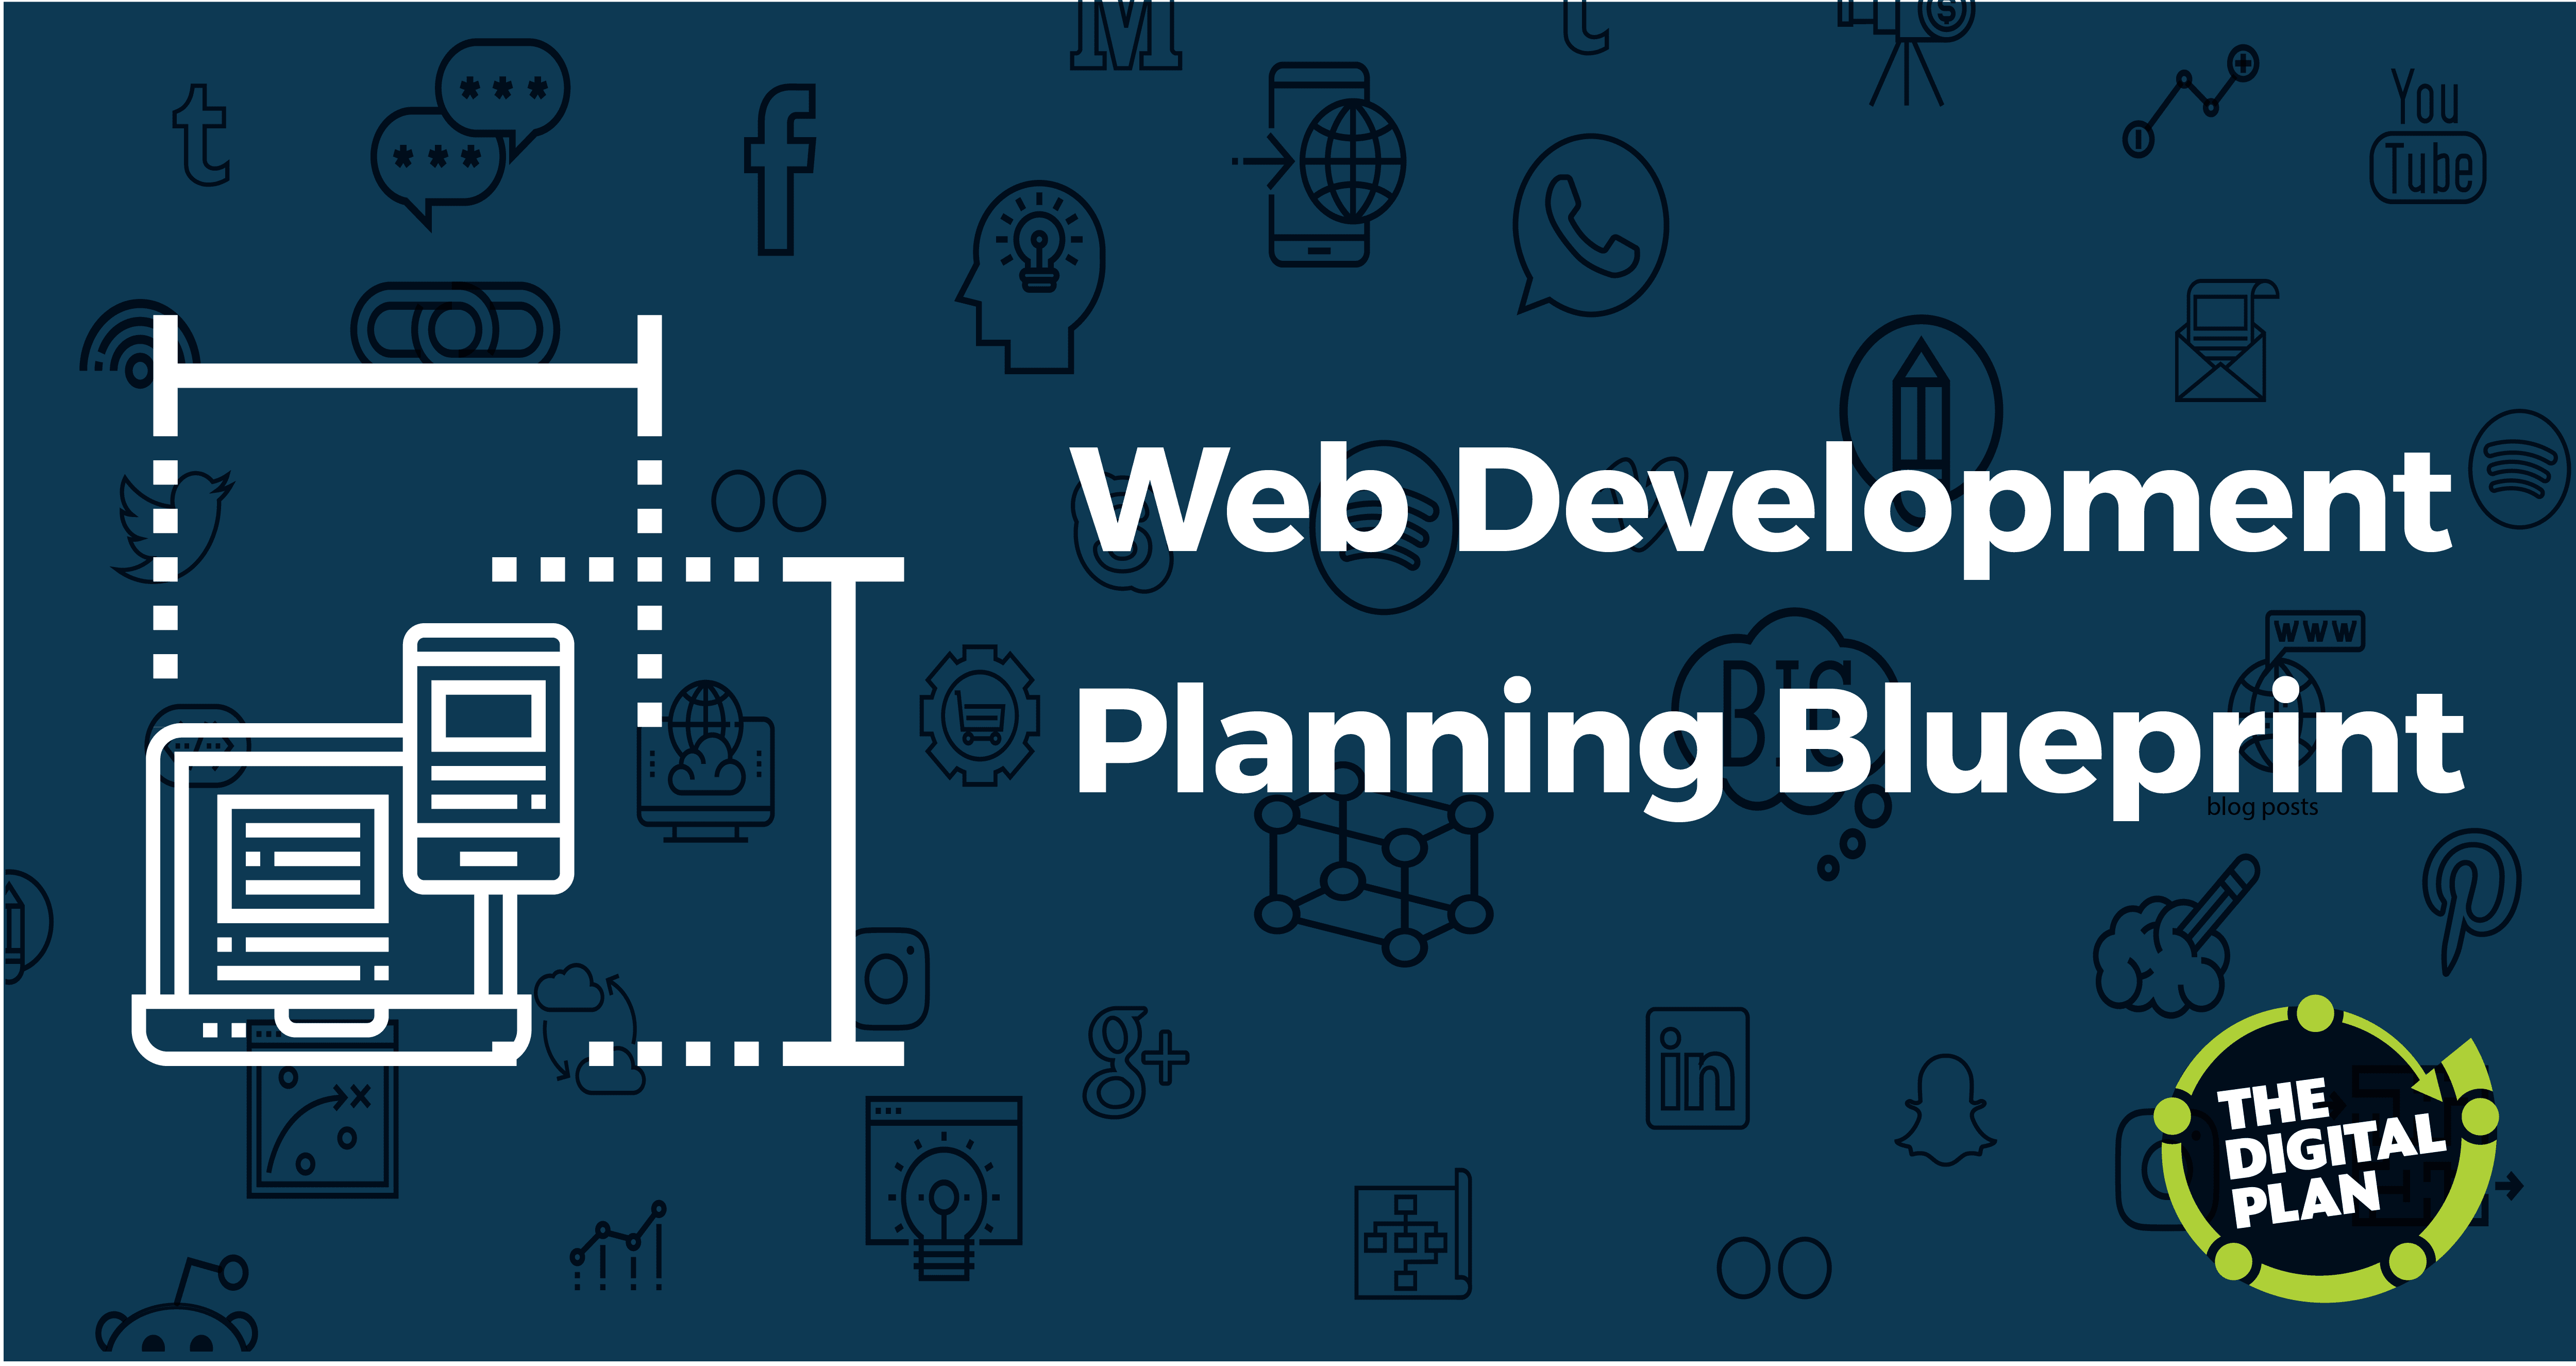 Web Development Planning Blueprint